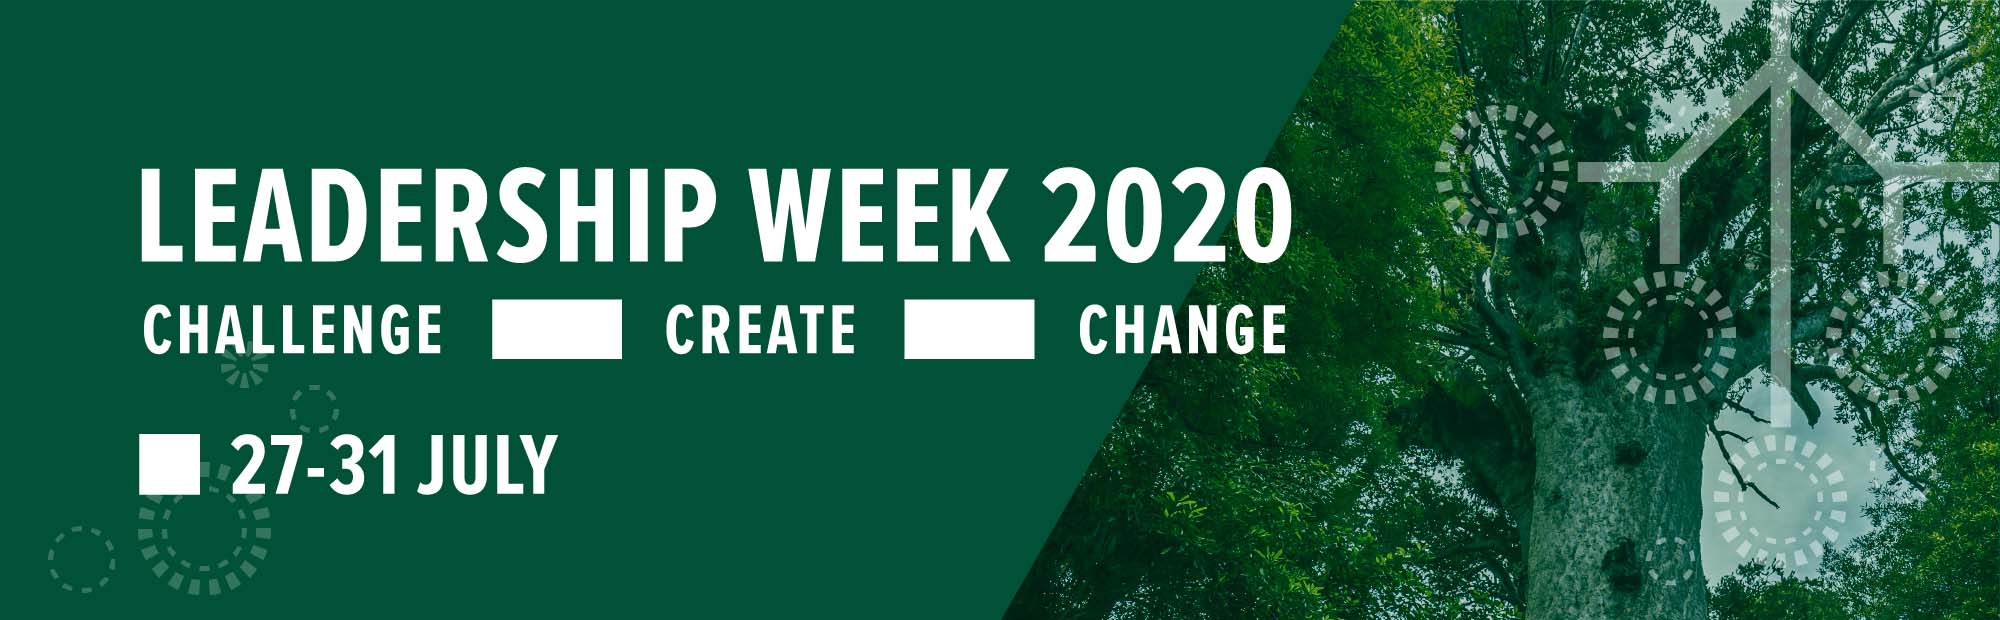 Promotion – Leadership Week 2020, Challenge, Create, Change, 27-31 July.